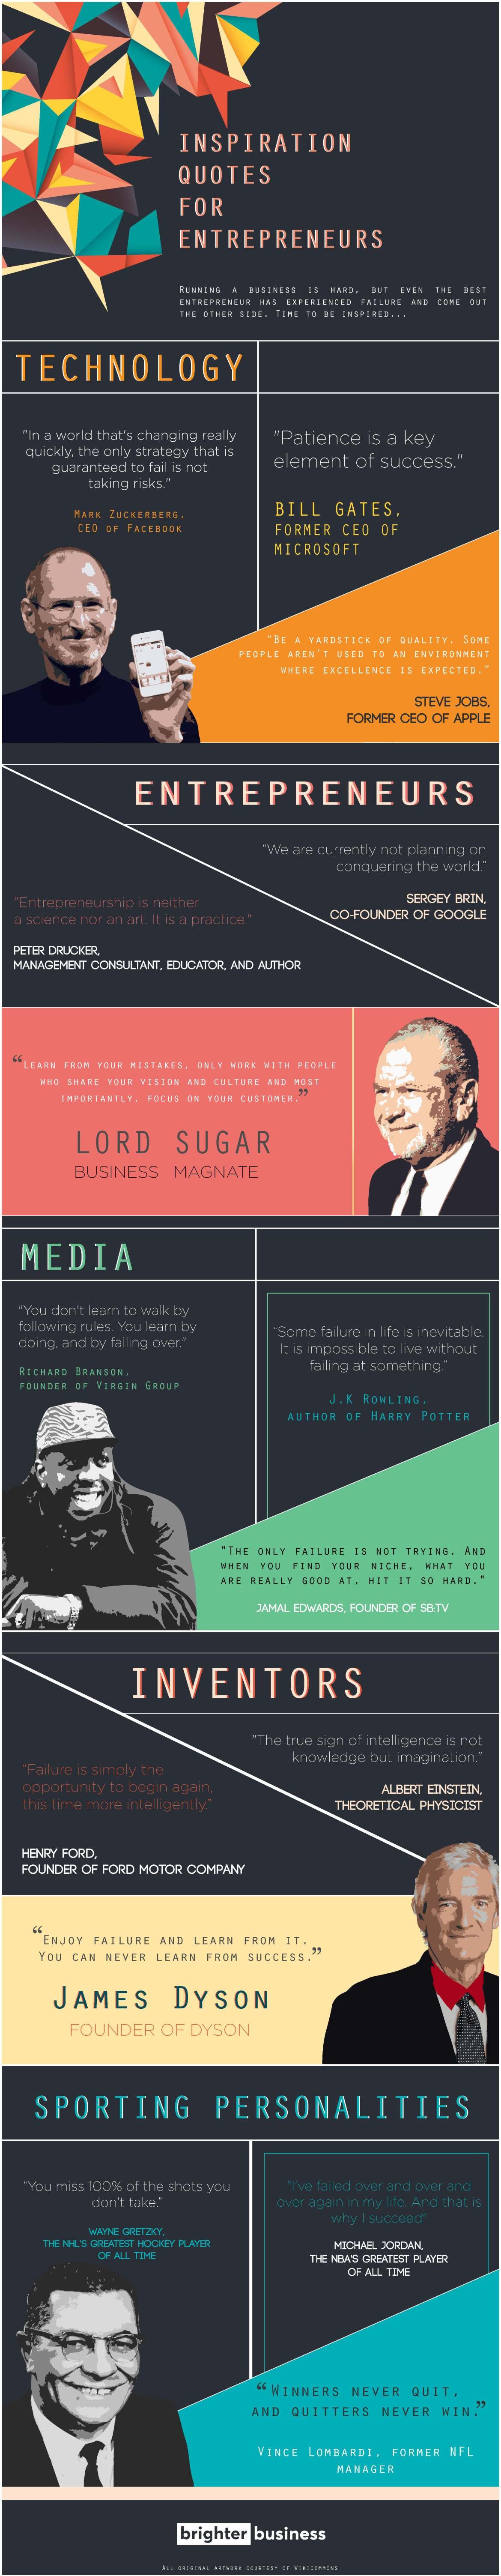 Inspiration Quotes For Entrepreneurs - #infographic / Digital